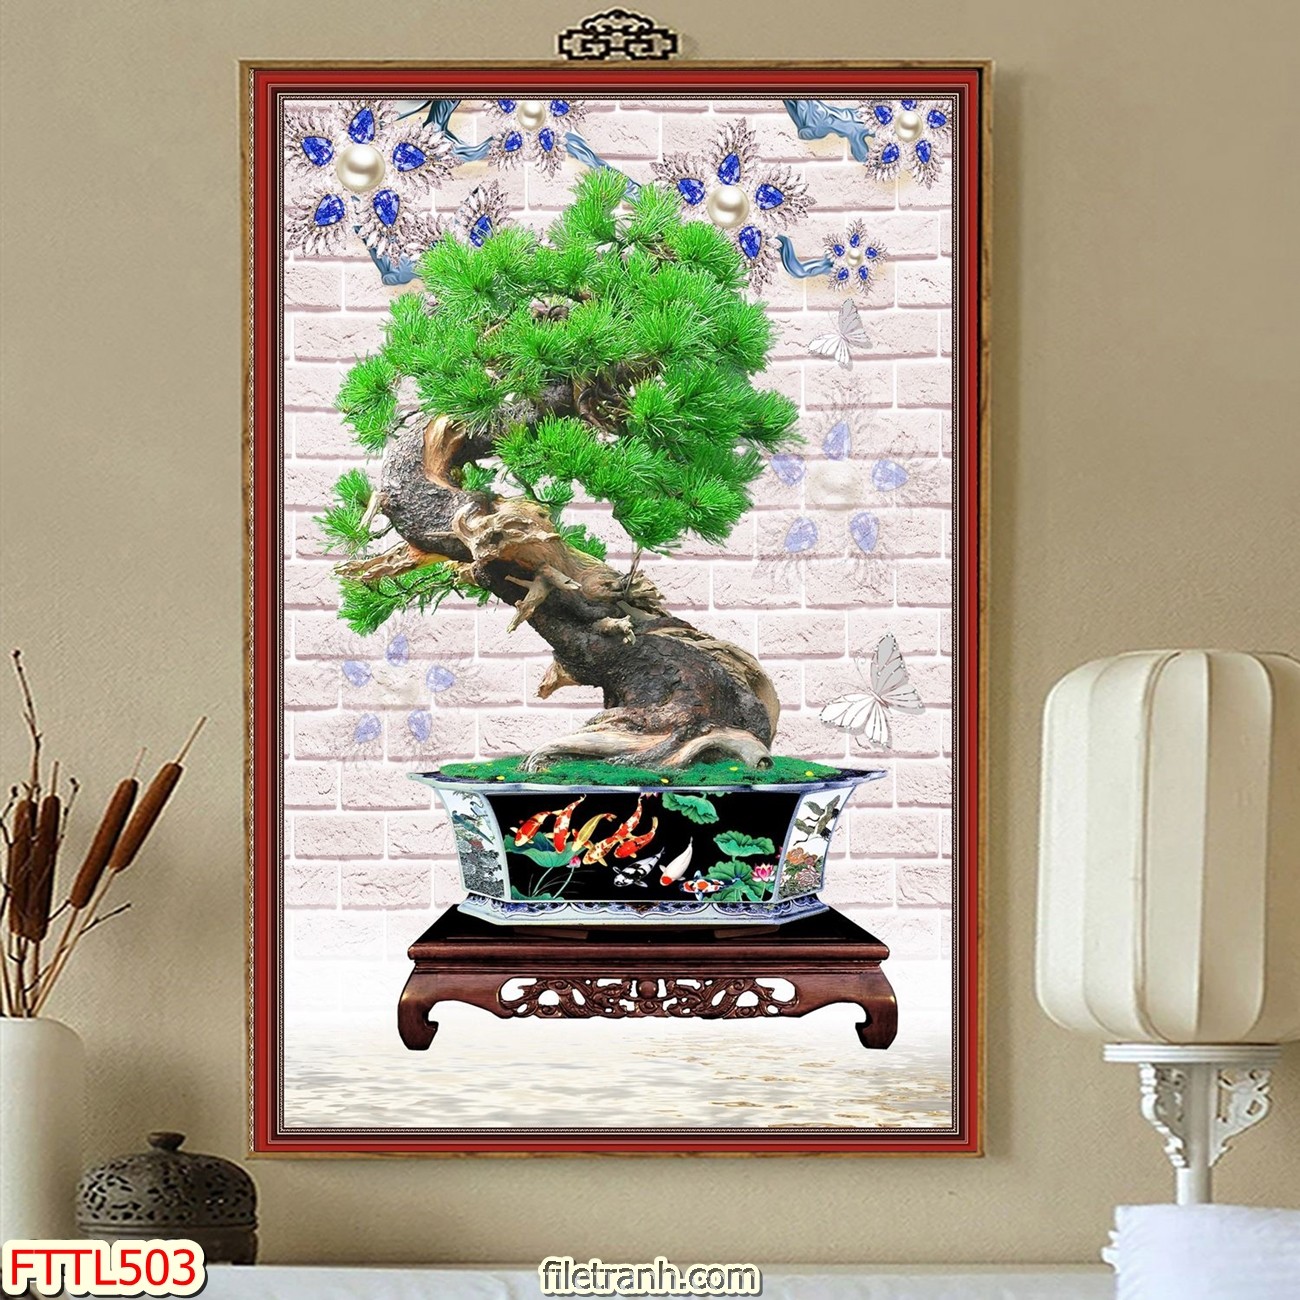 https://filetranh.com/file-tranh-chau-mai-bonsai/file-tranh-chau-mai-bonsai-fttl503.html